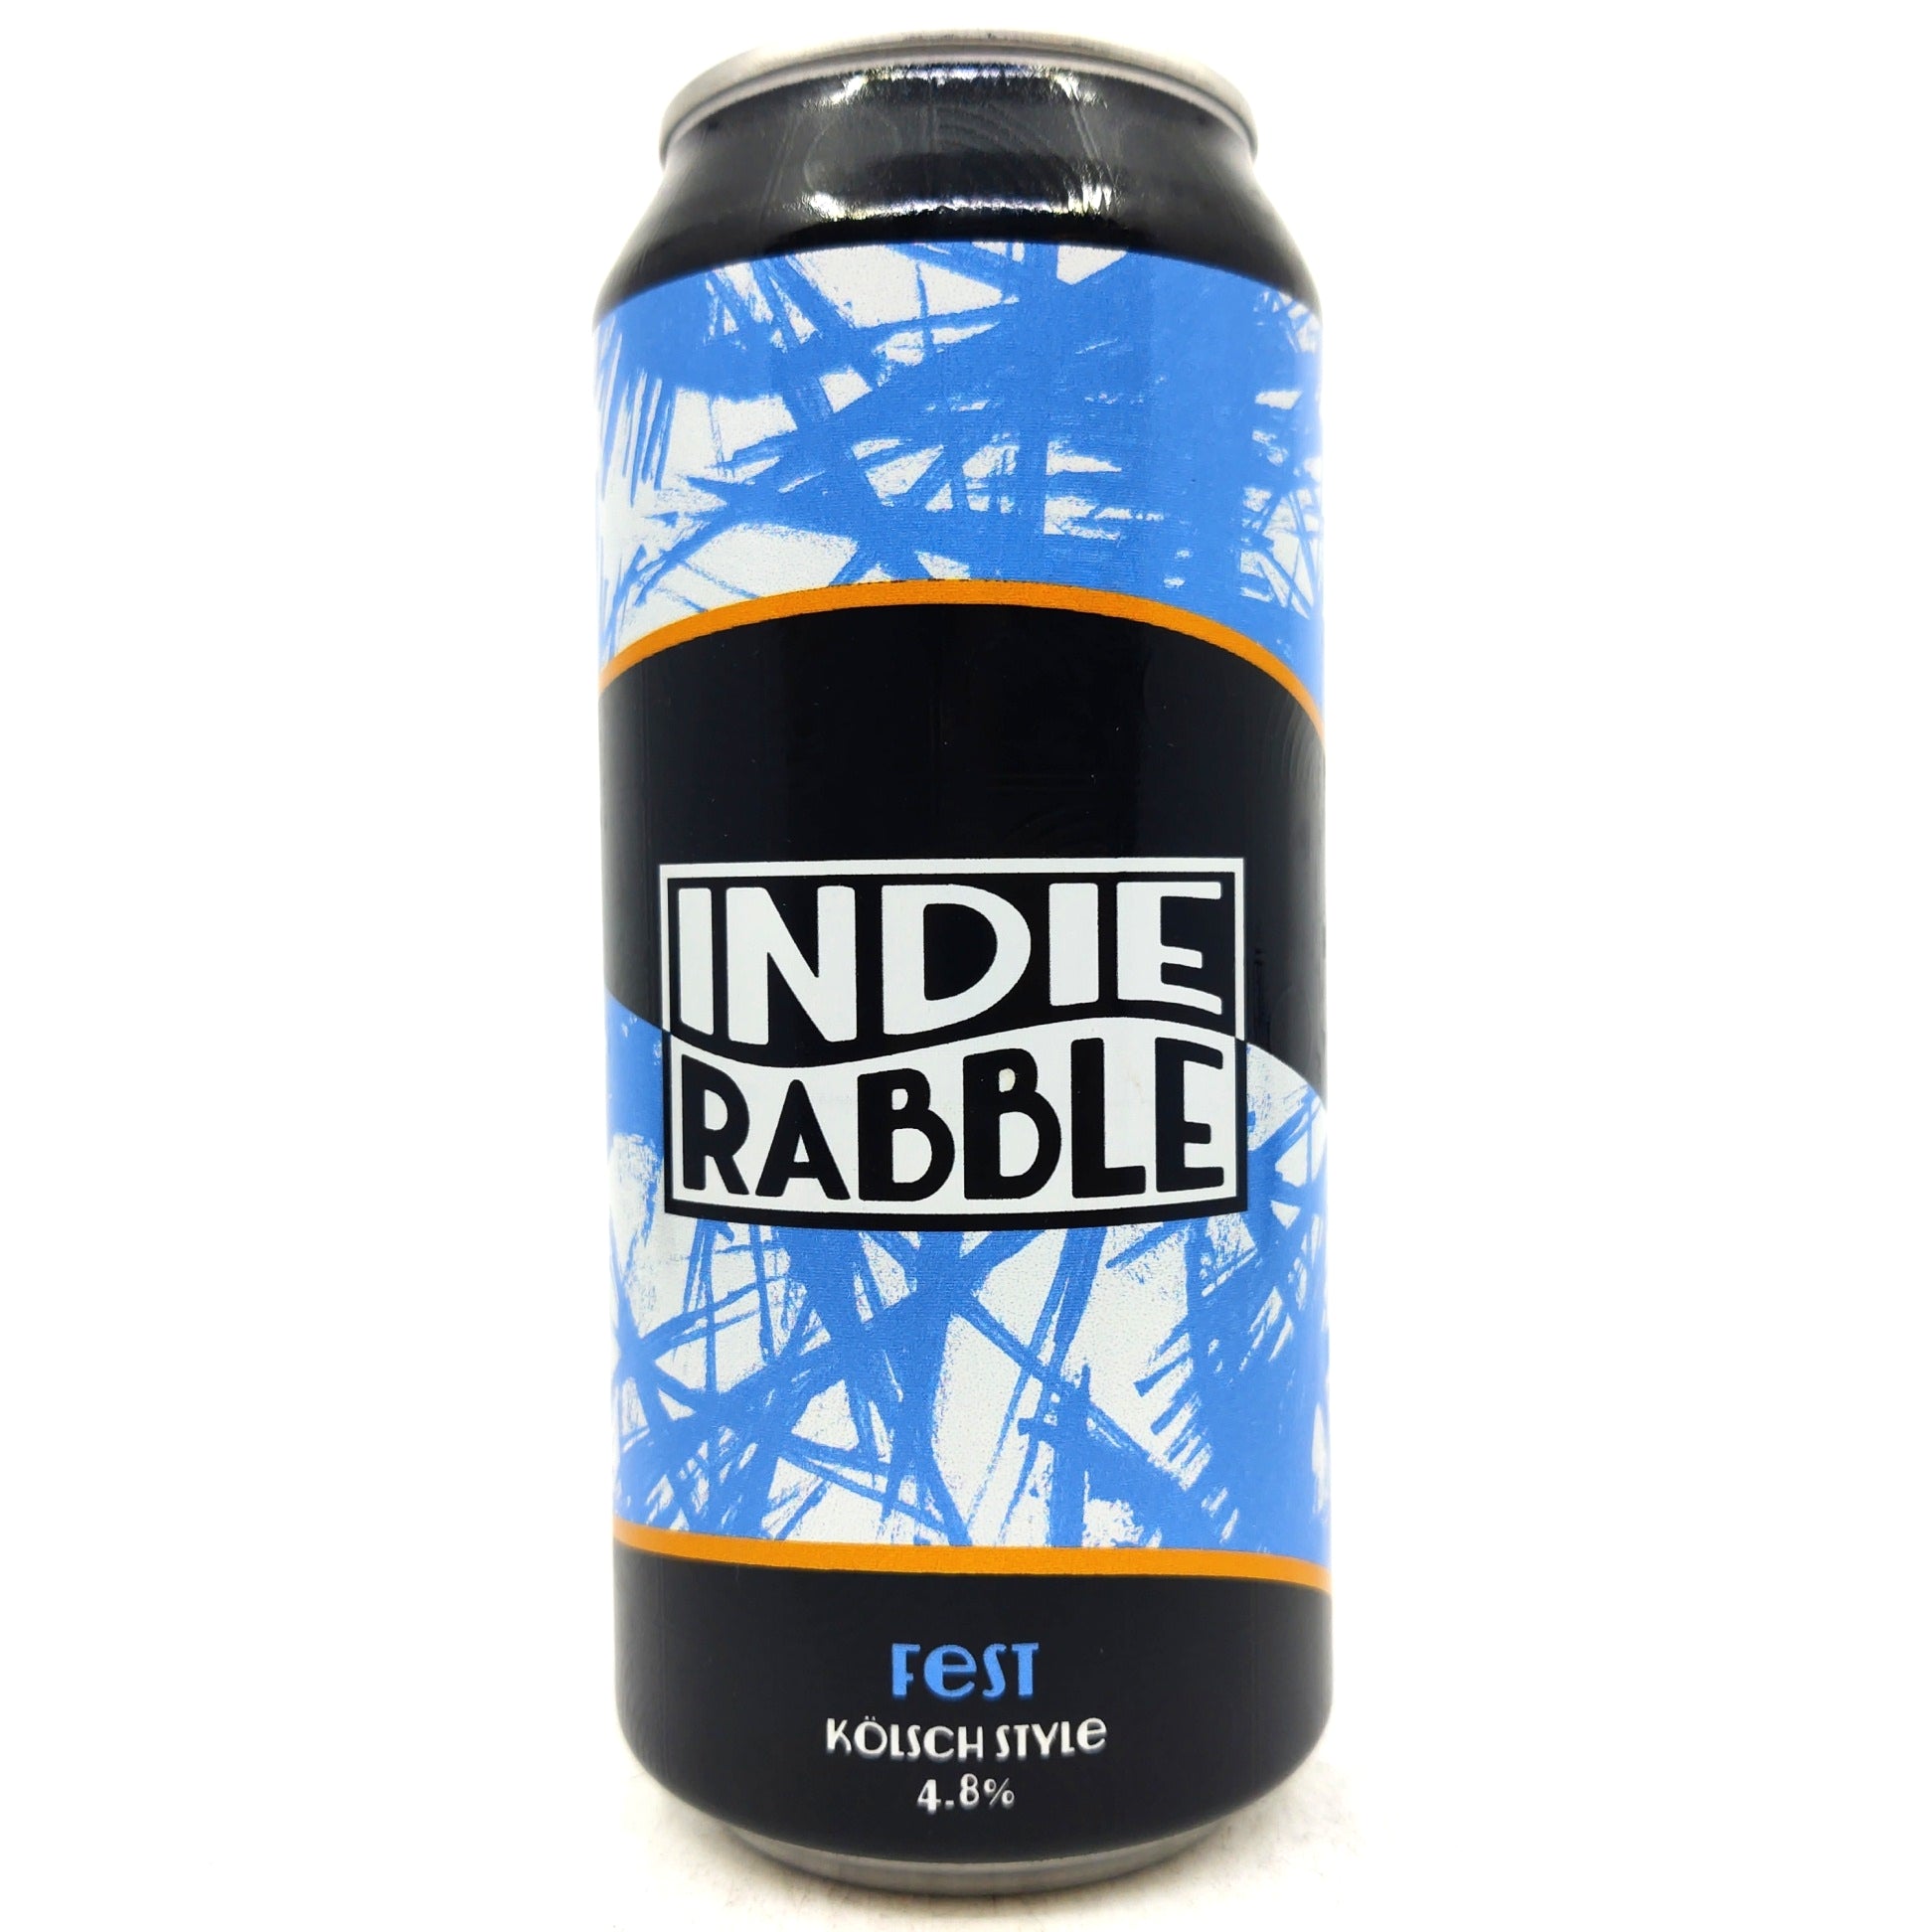 Indie Rabble Fest Kolsch 4.8% (440ml can)-Hop Burns & Black